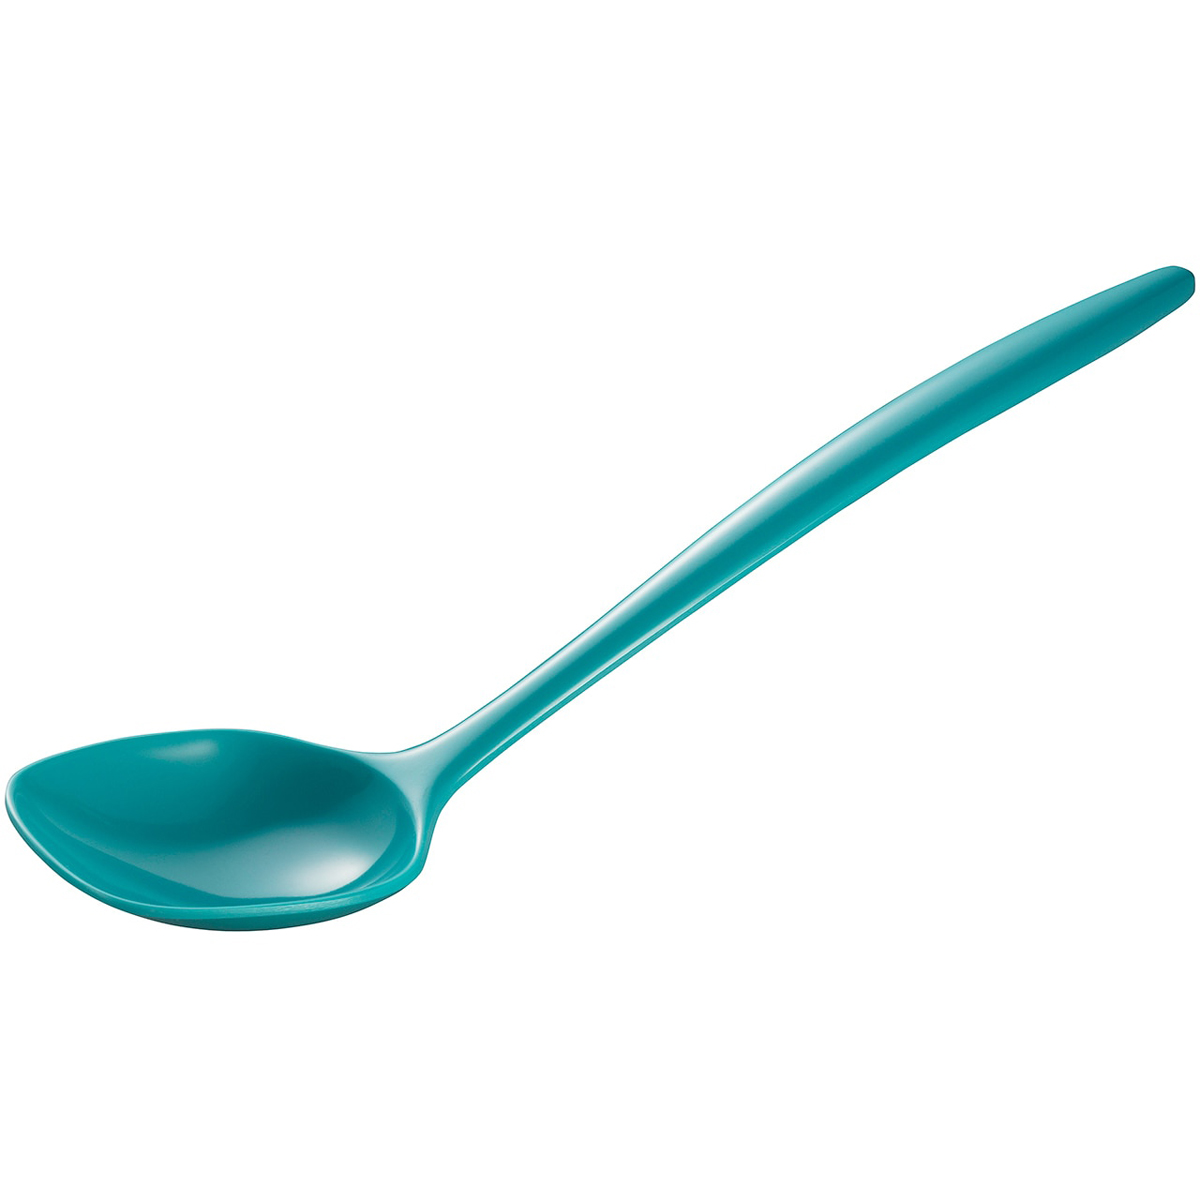 Gourmac G3526TU 12" Turquoise Melamine Serving Spoon